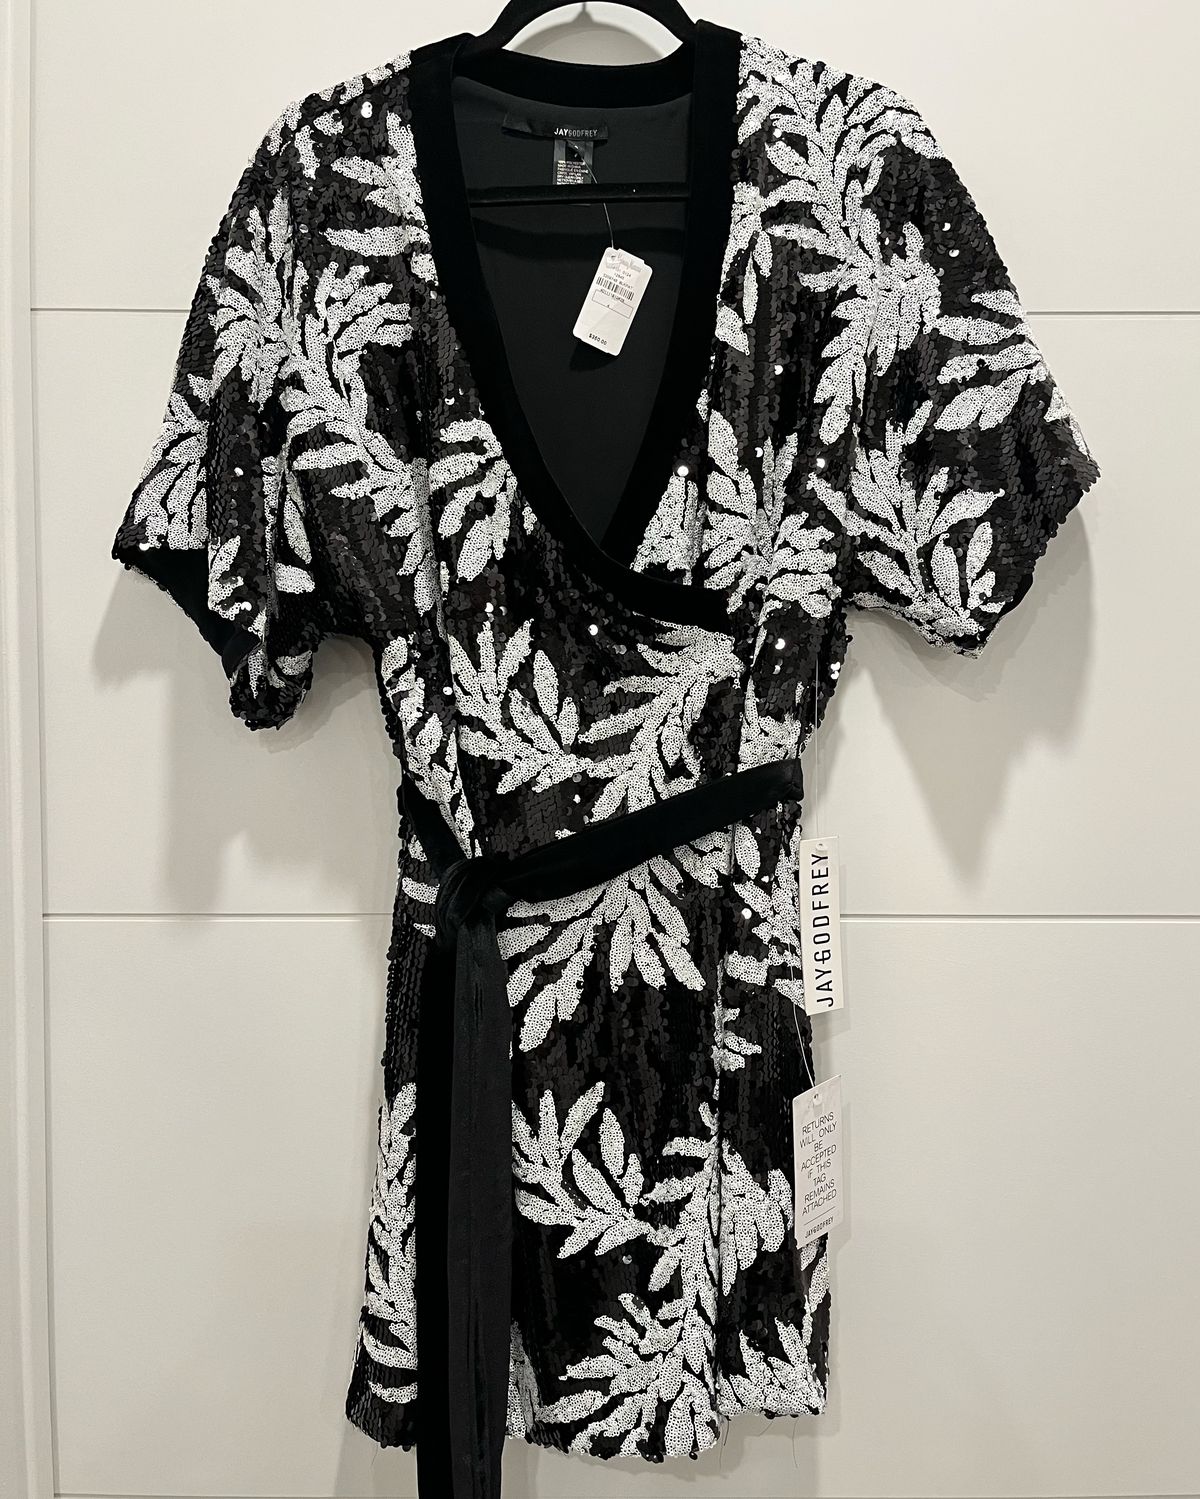 JAYGODFREY Size 4 Velvet Black Cocktail Dress on Queenly